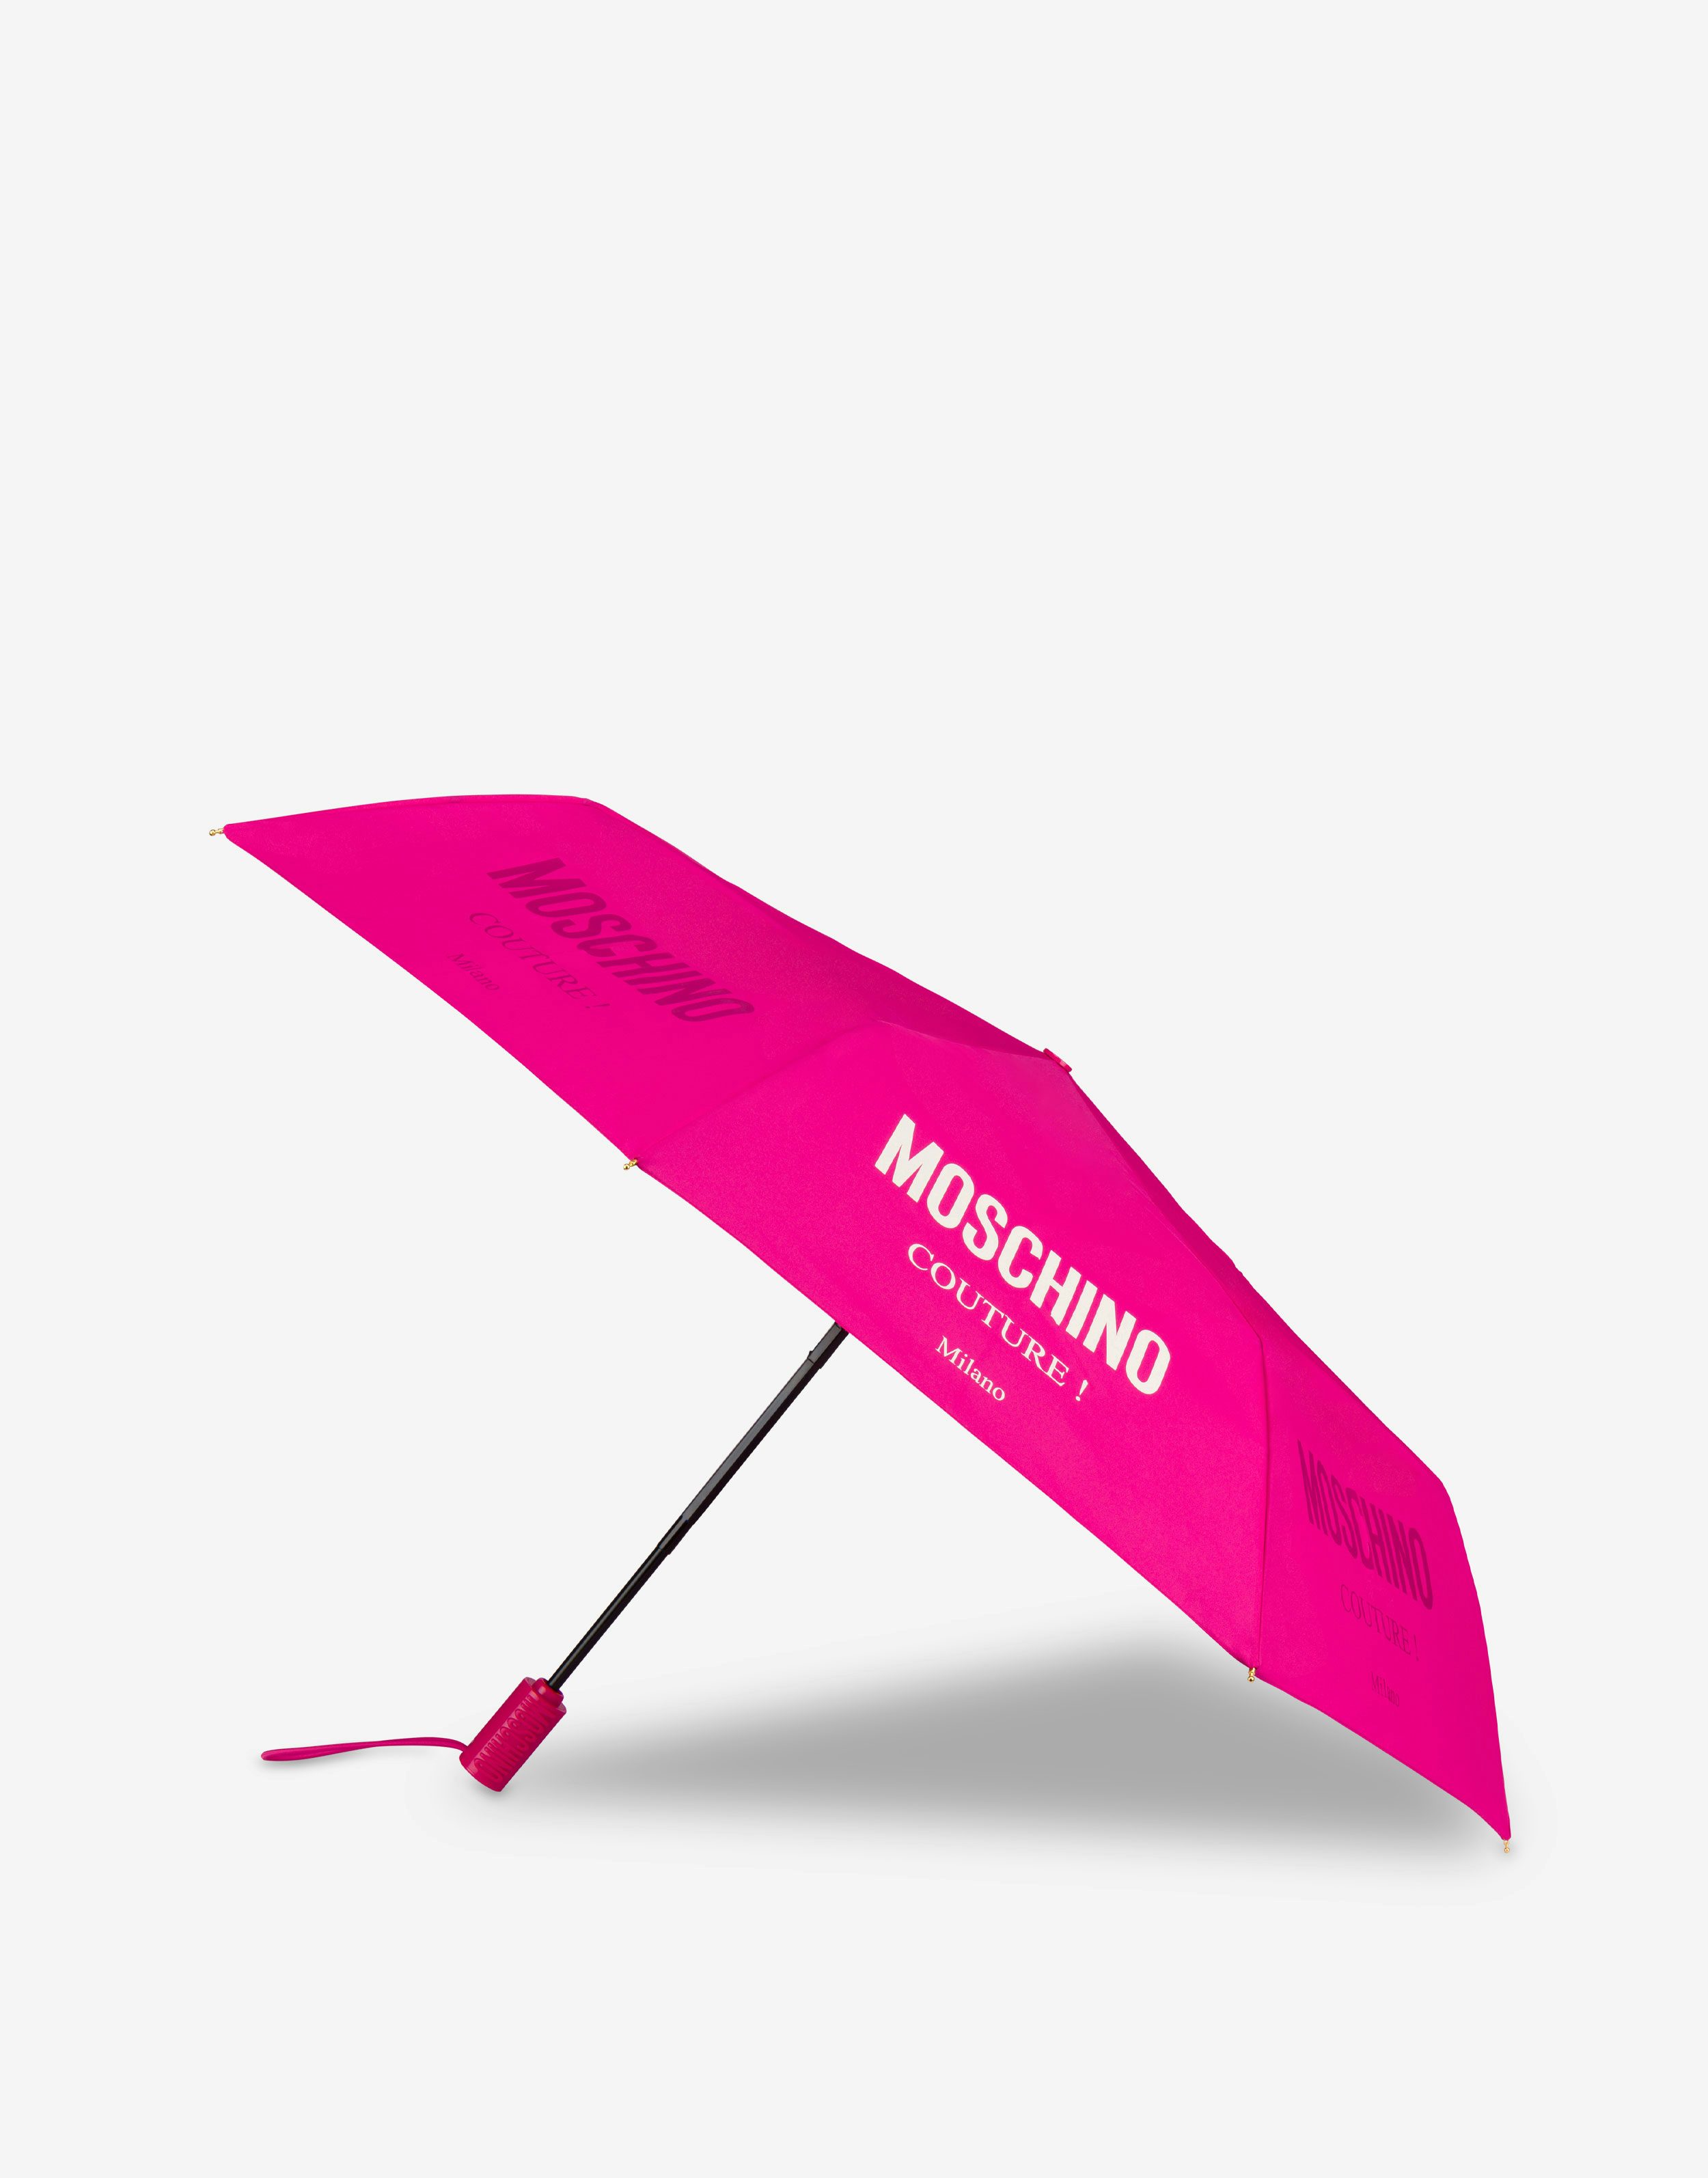 Moschino Couture open & close umbrella 0